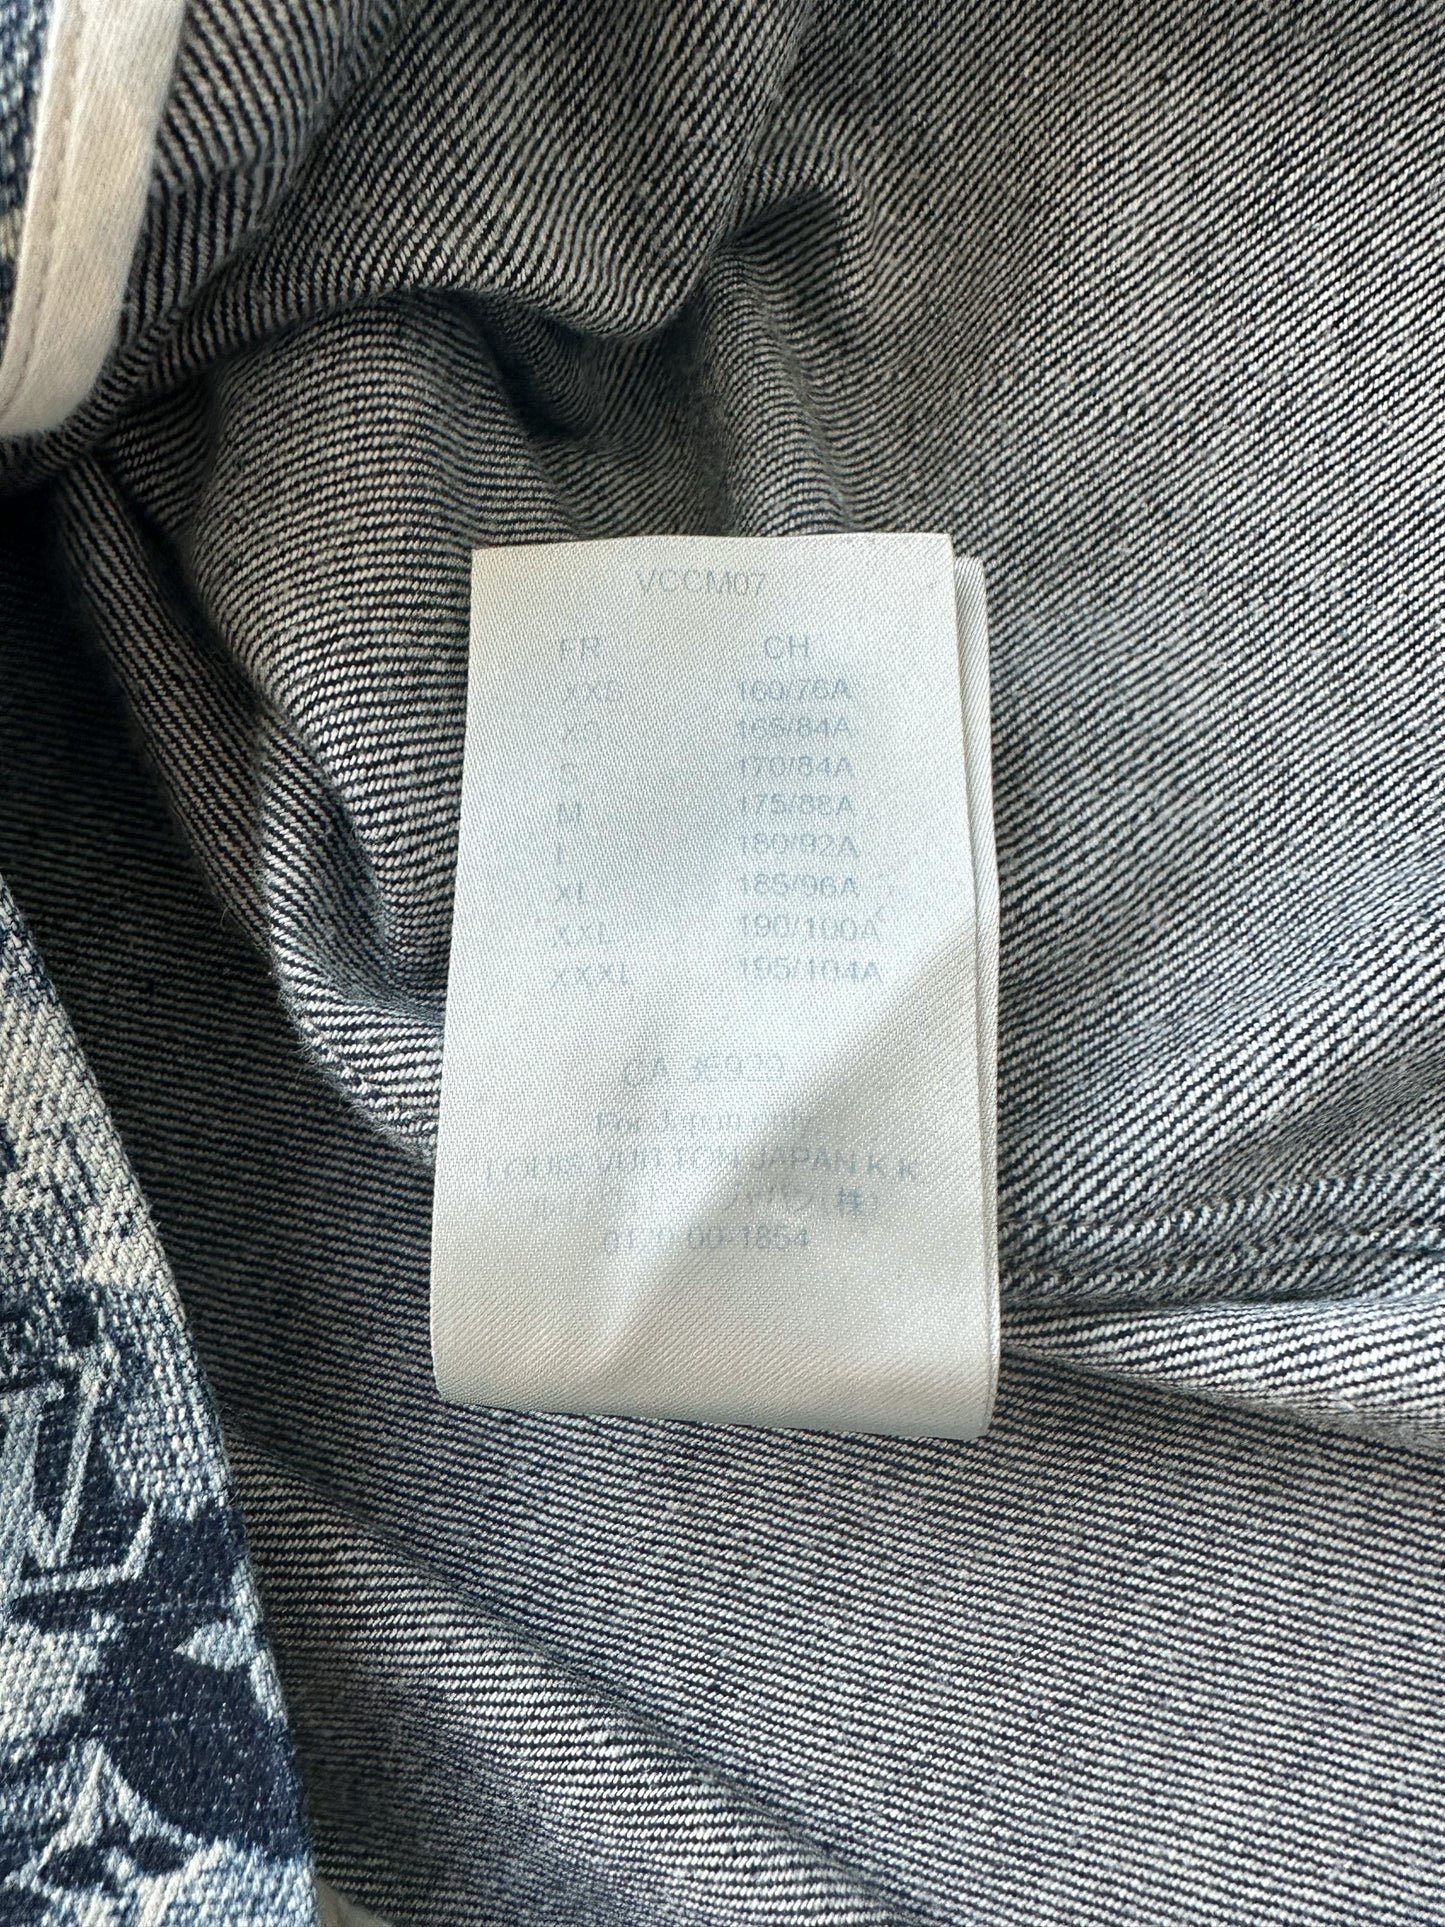 Louis Vuitton DNA Tapestry Button Up Shirt